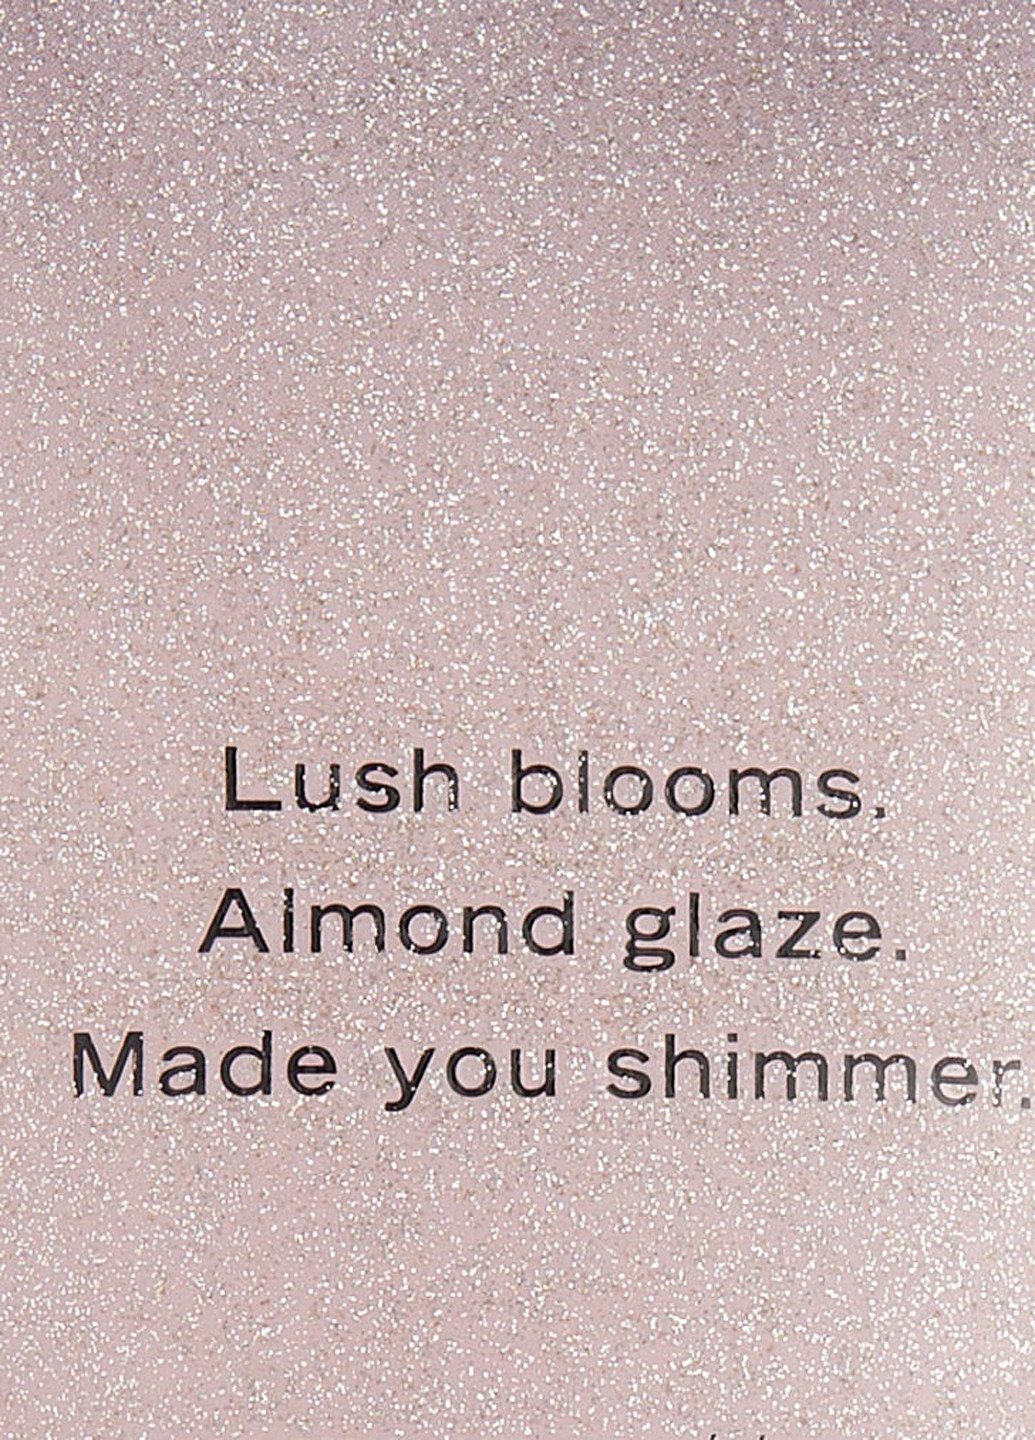 Набор для тела Velvet Petals Shimmer (2 пр.) Victoria's Secret (268750119)